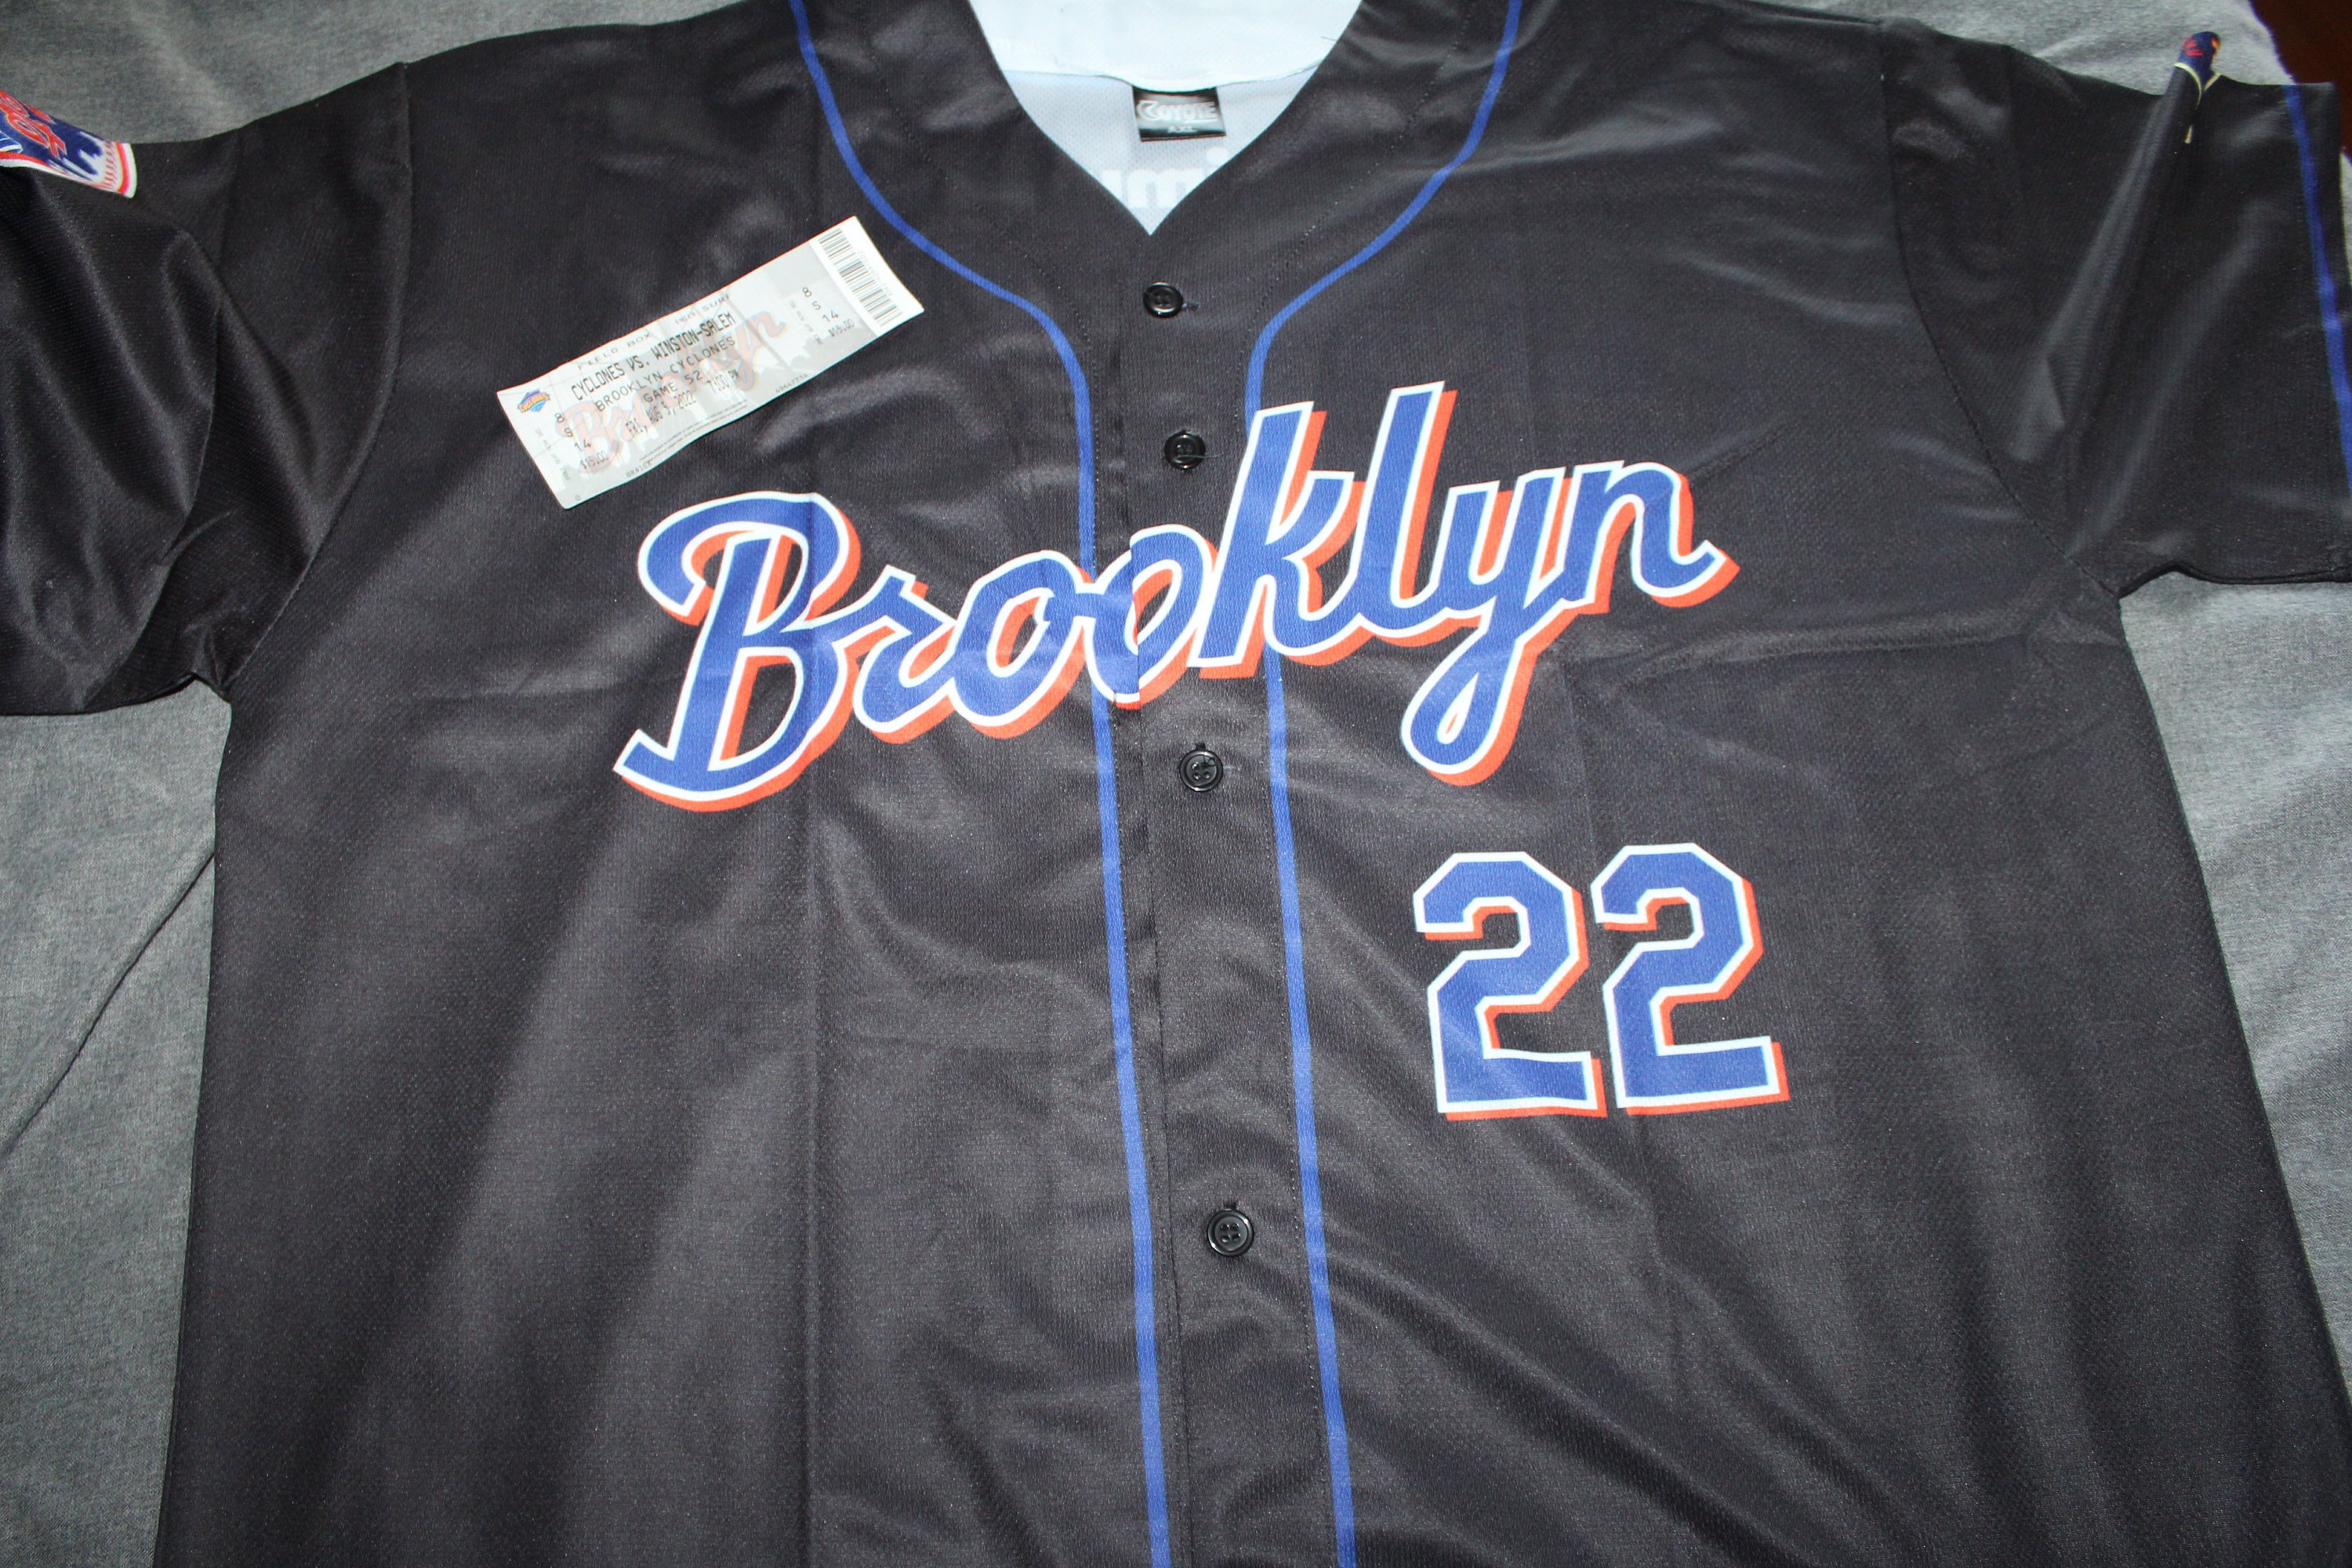 2022 Brooklyn Cyclone Baseball Jerseys ADULT XL NEW Sga Brand 